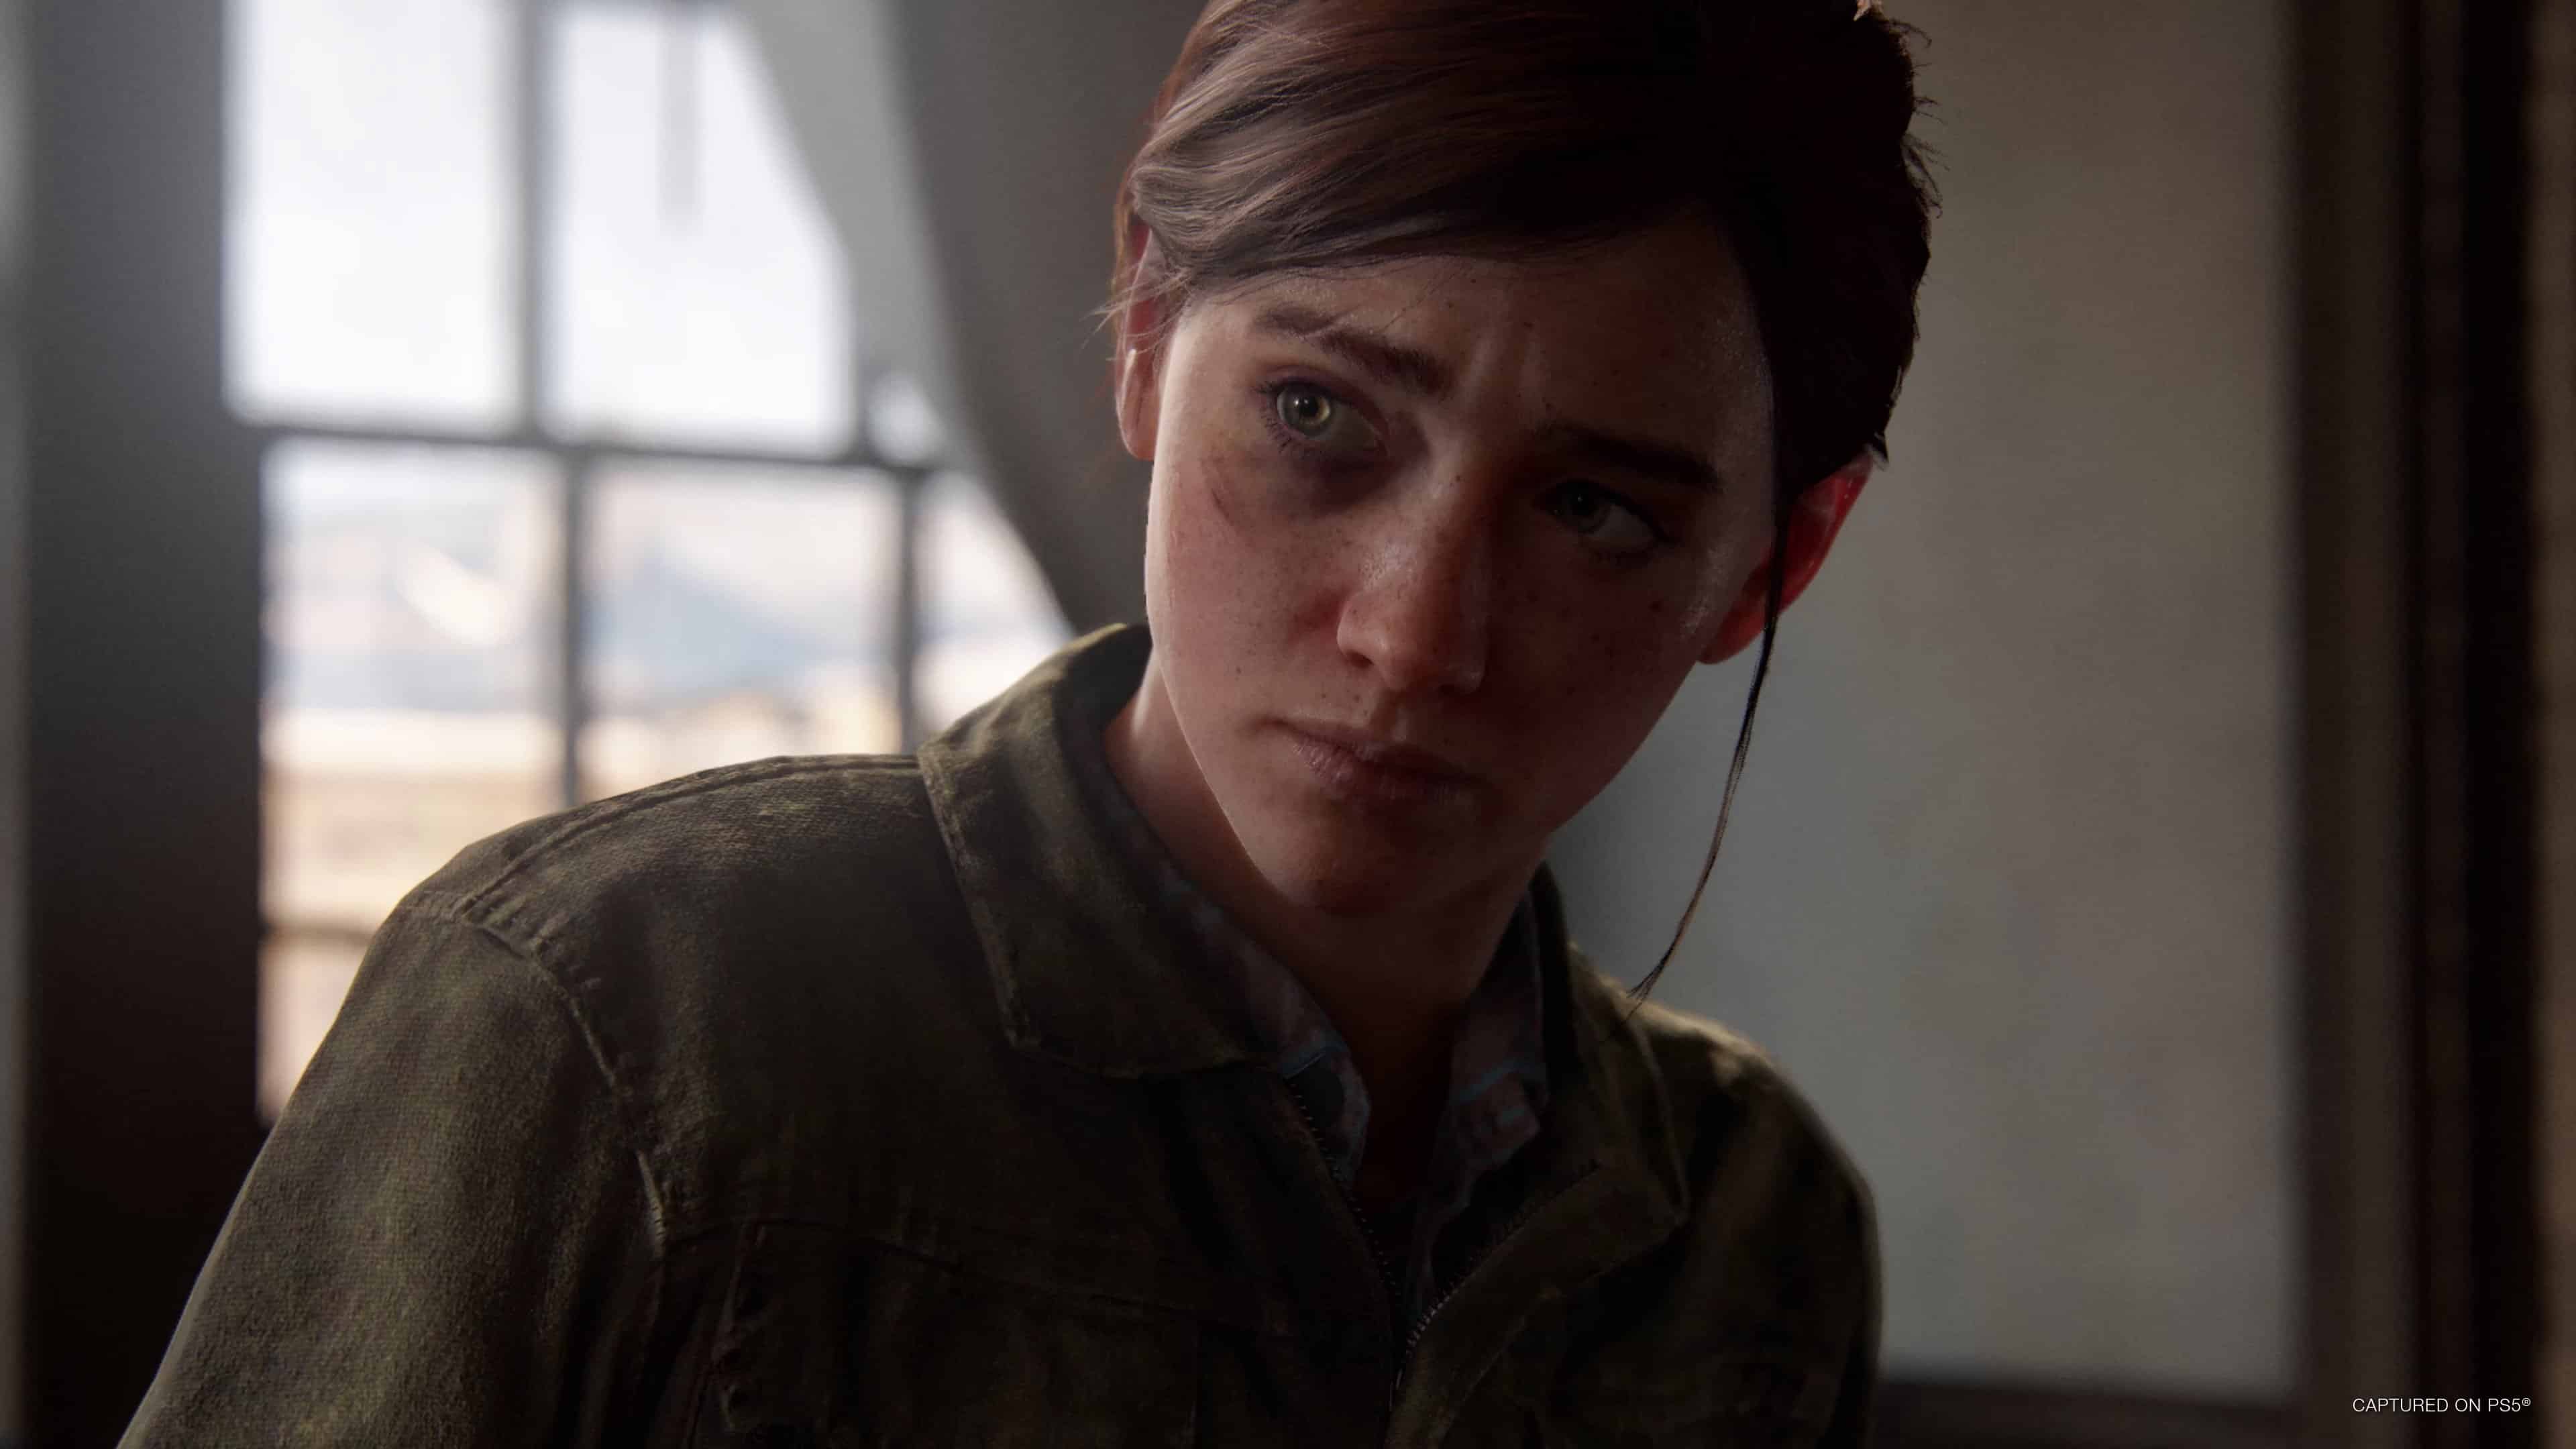 The Last of Us Part II Remastered PS5 : Où précommander le jeu